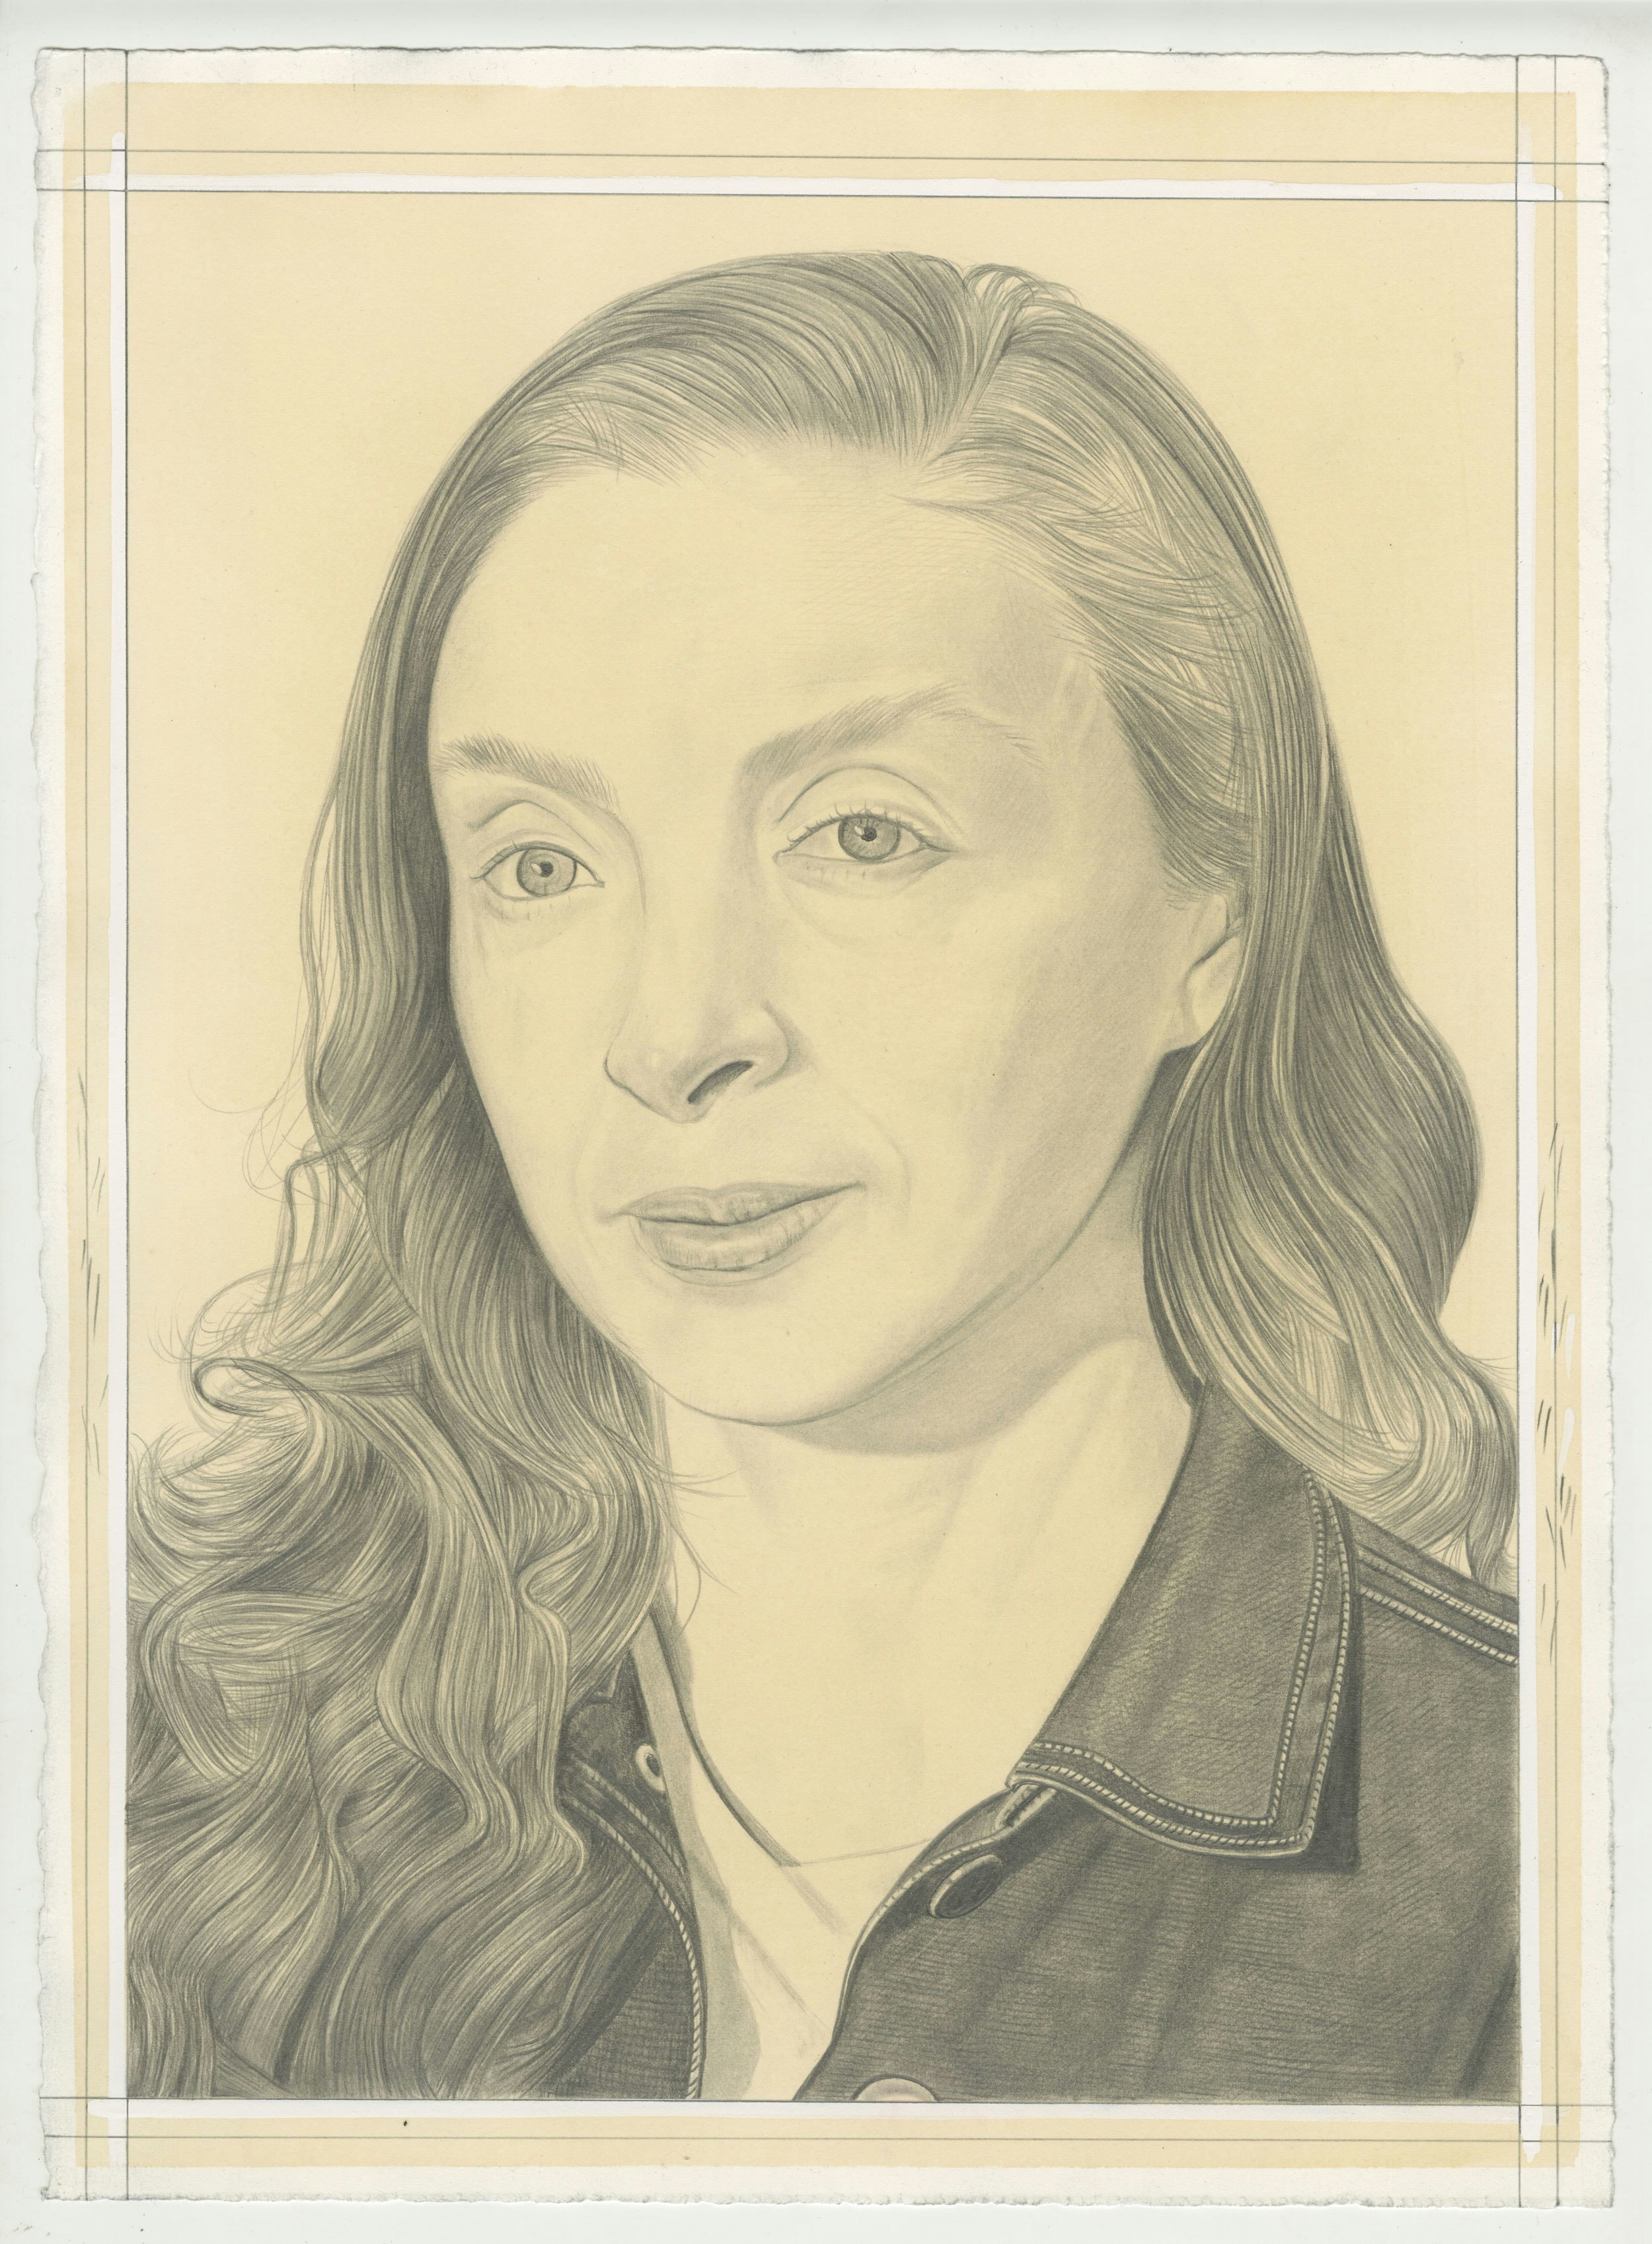 Portrait of Rachel Feinstein, pencil on paper by Phong Bui.